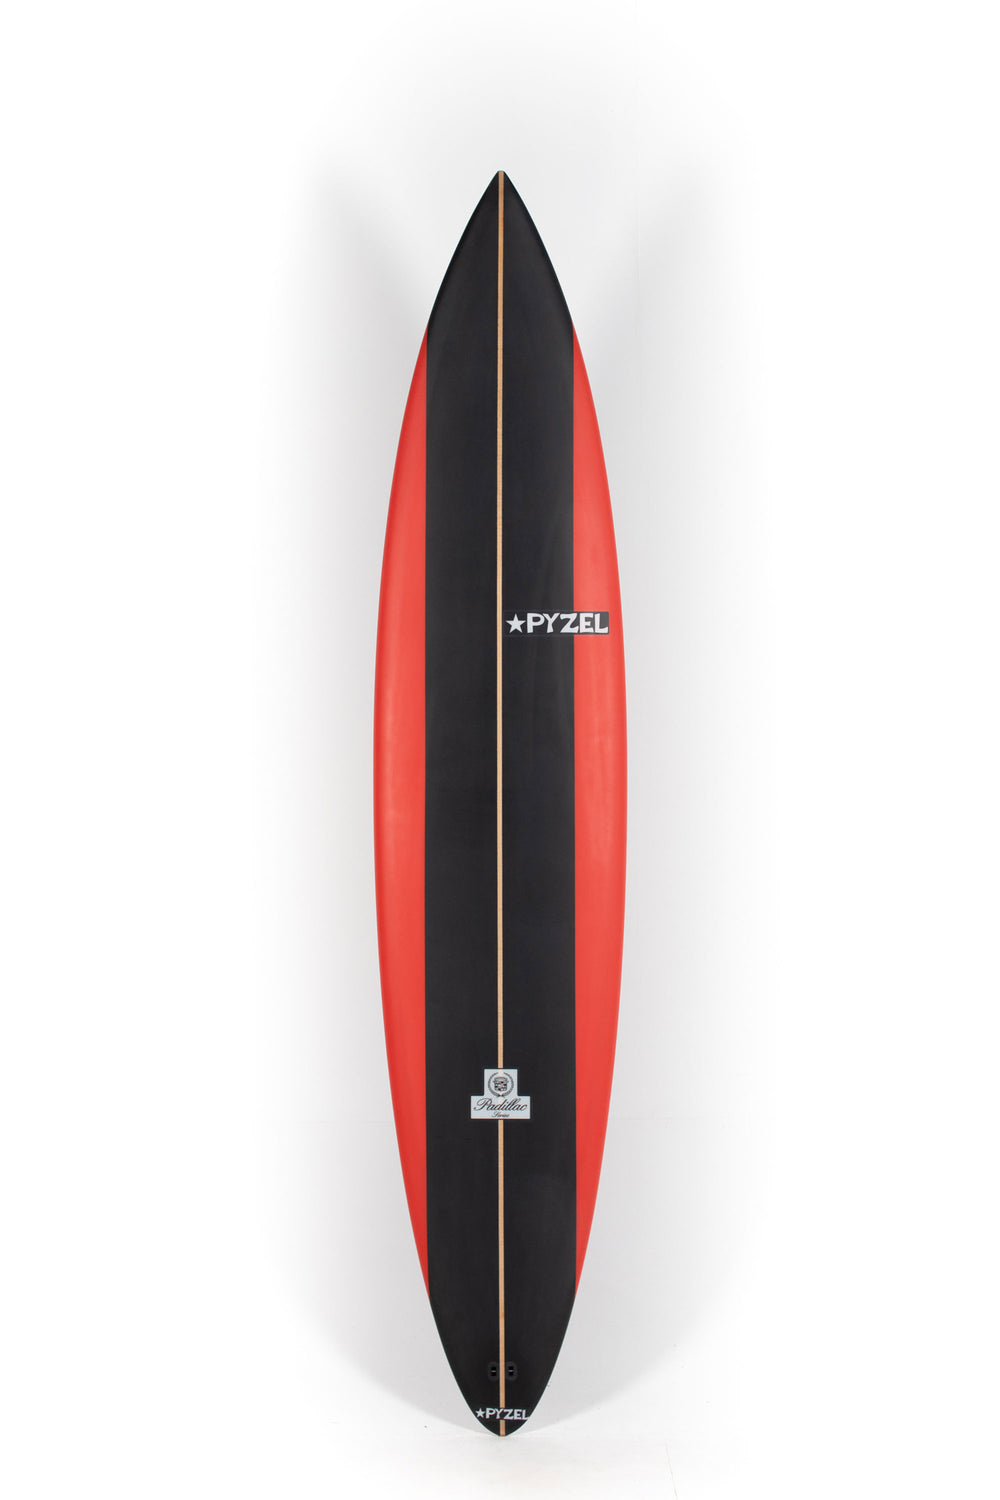 Pukas Surf Shop - Pyzel Surfboards - PADILLAC - 8'6